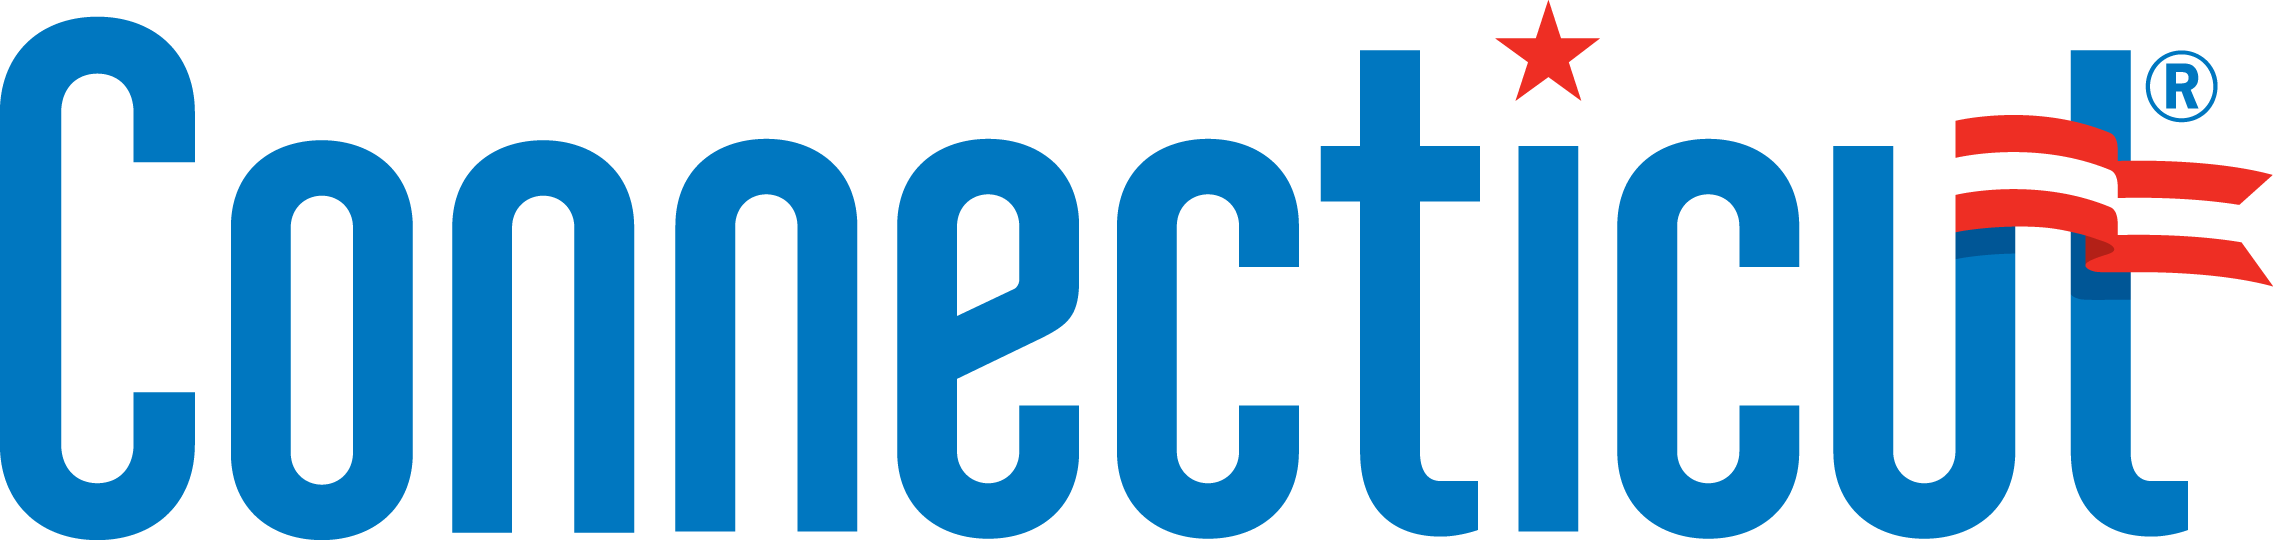 Connecticut logo